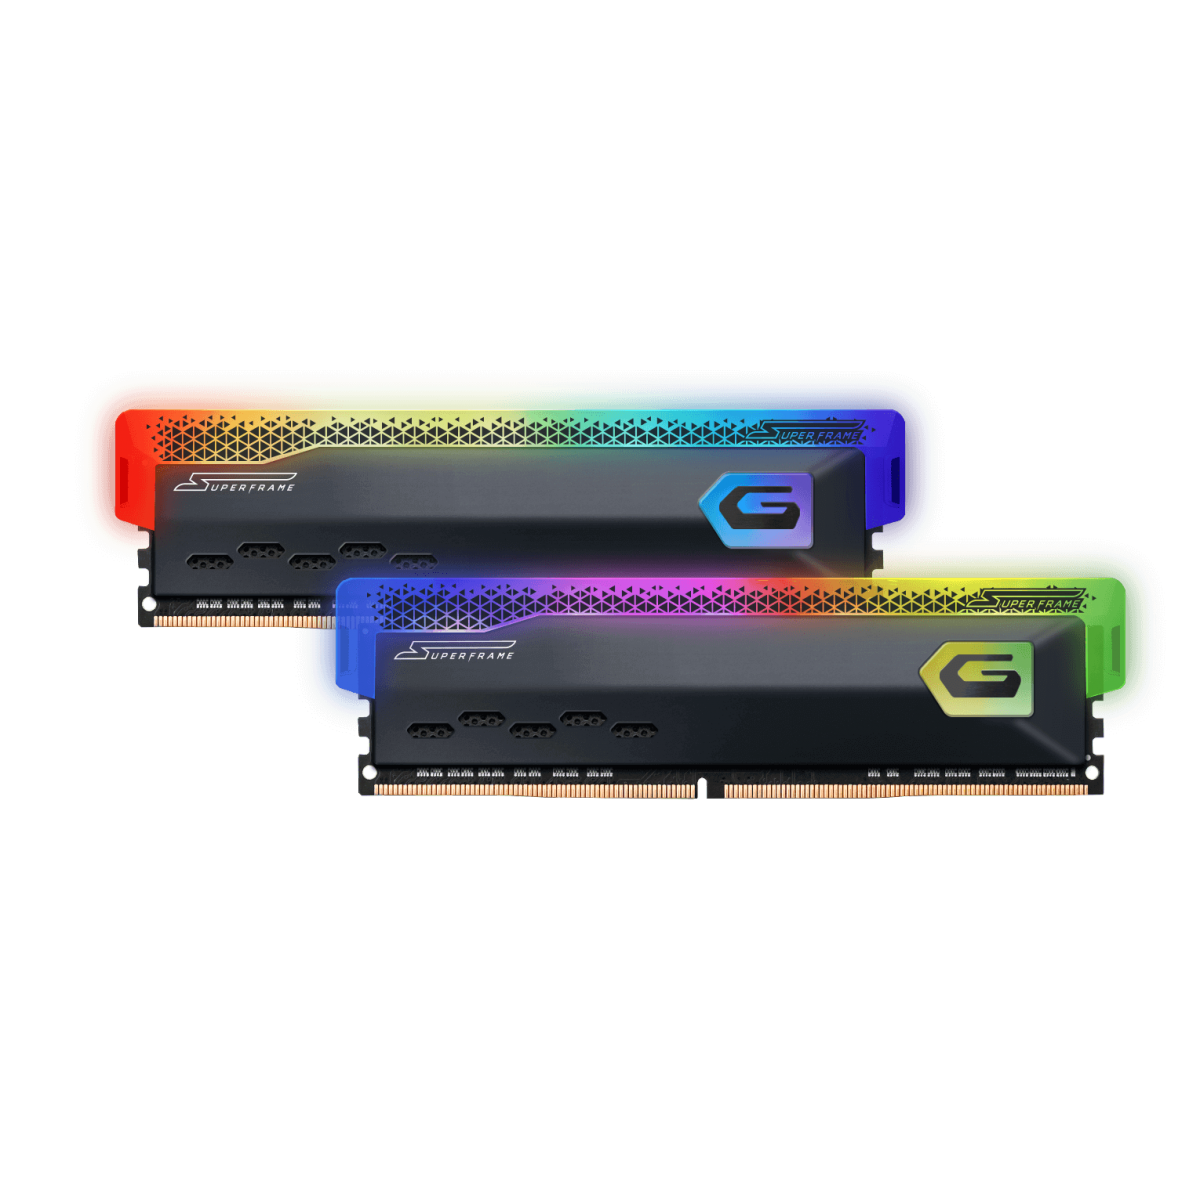 Kit Upgrade, AMD Ryzen 5 5600G, Placa Mãe SuperFrame A520M Gaming, Memória DDR4 SuperFrame RGB 16GB (2X8GB)